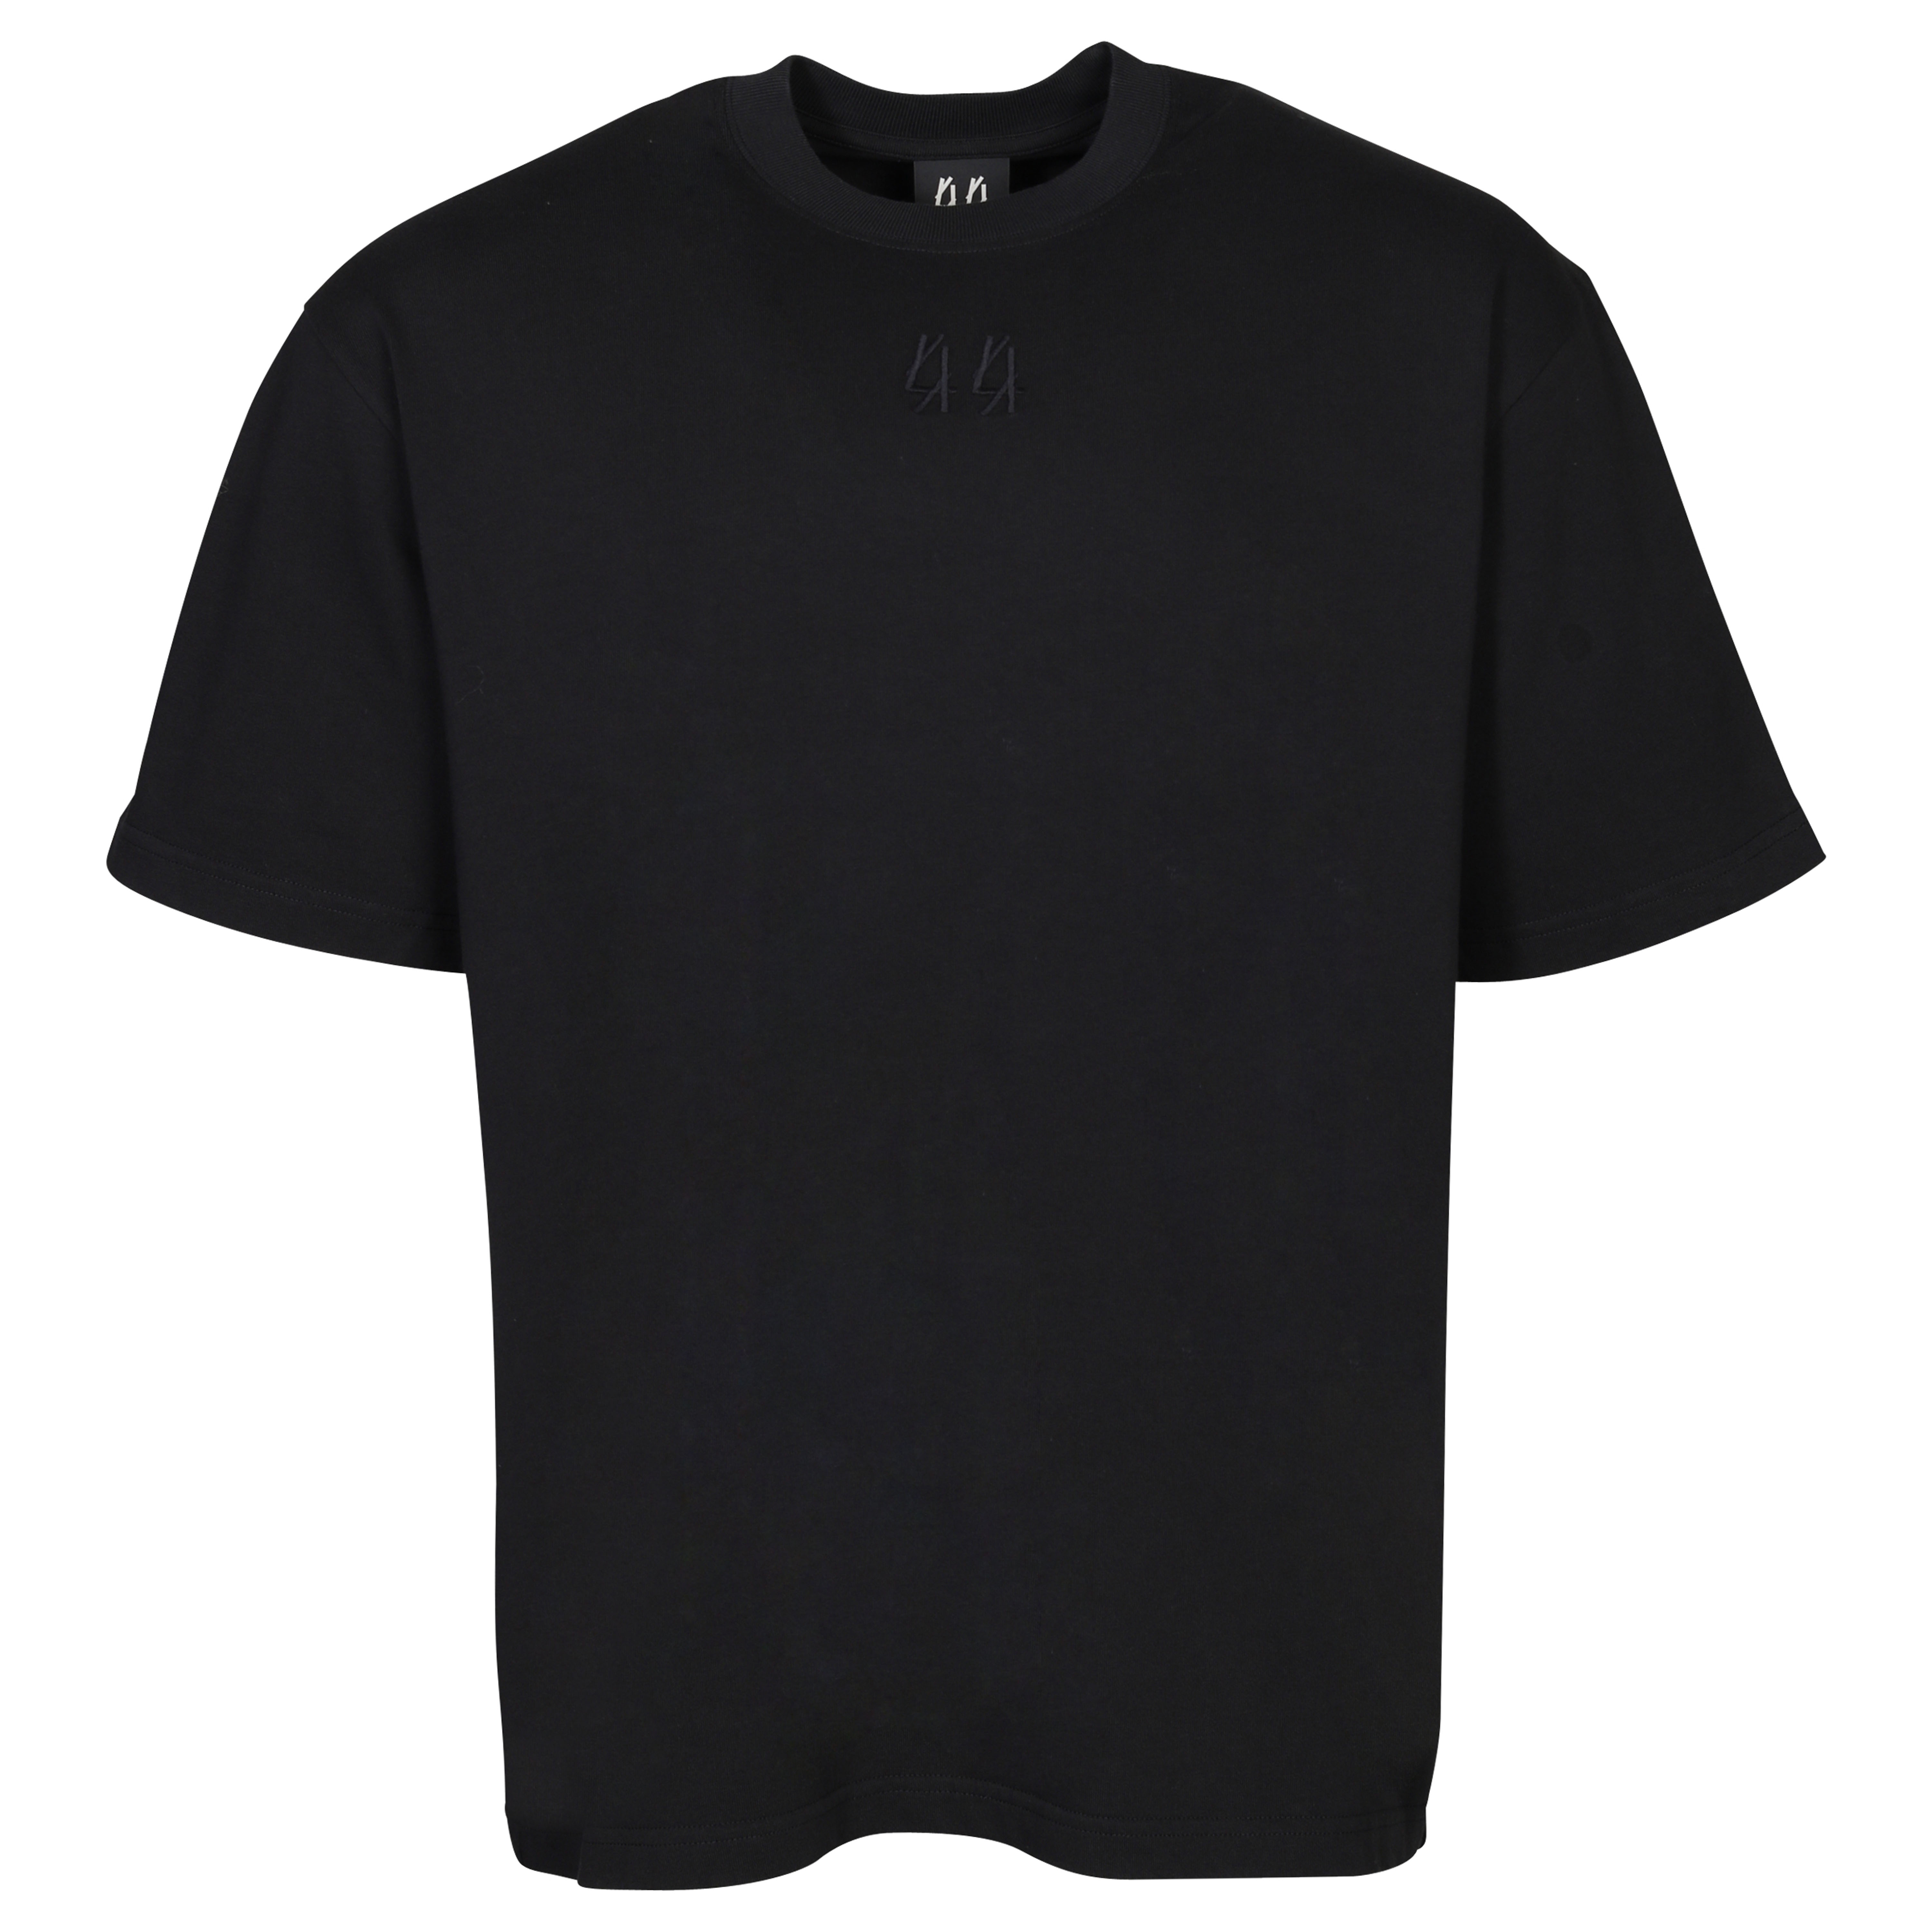 44 Label Group Original T-Shirt in Black/Sand Backprint